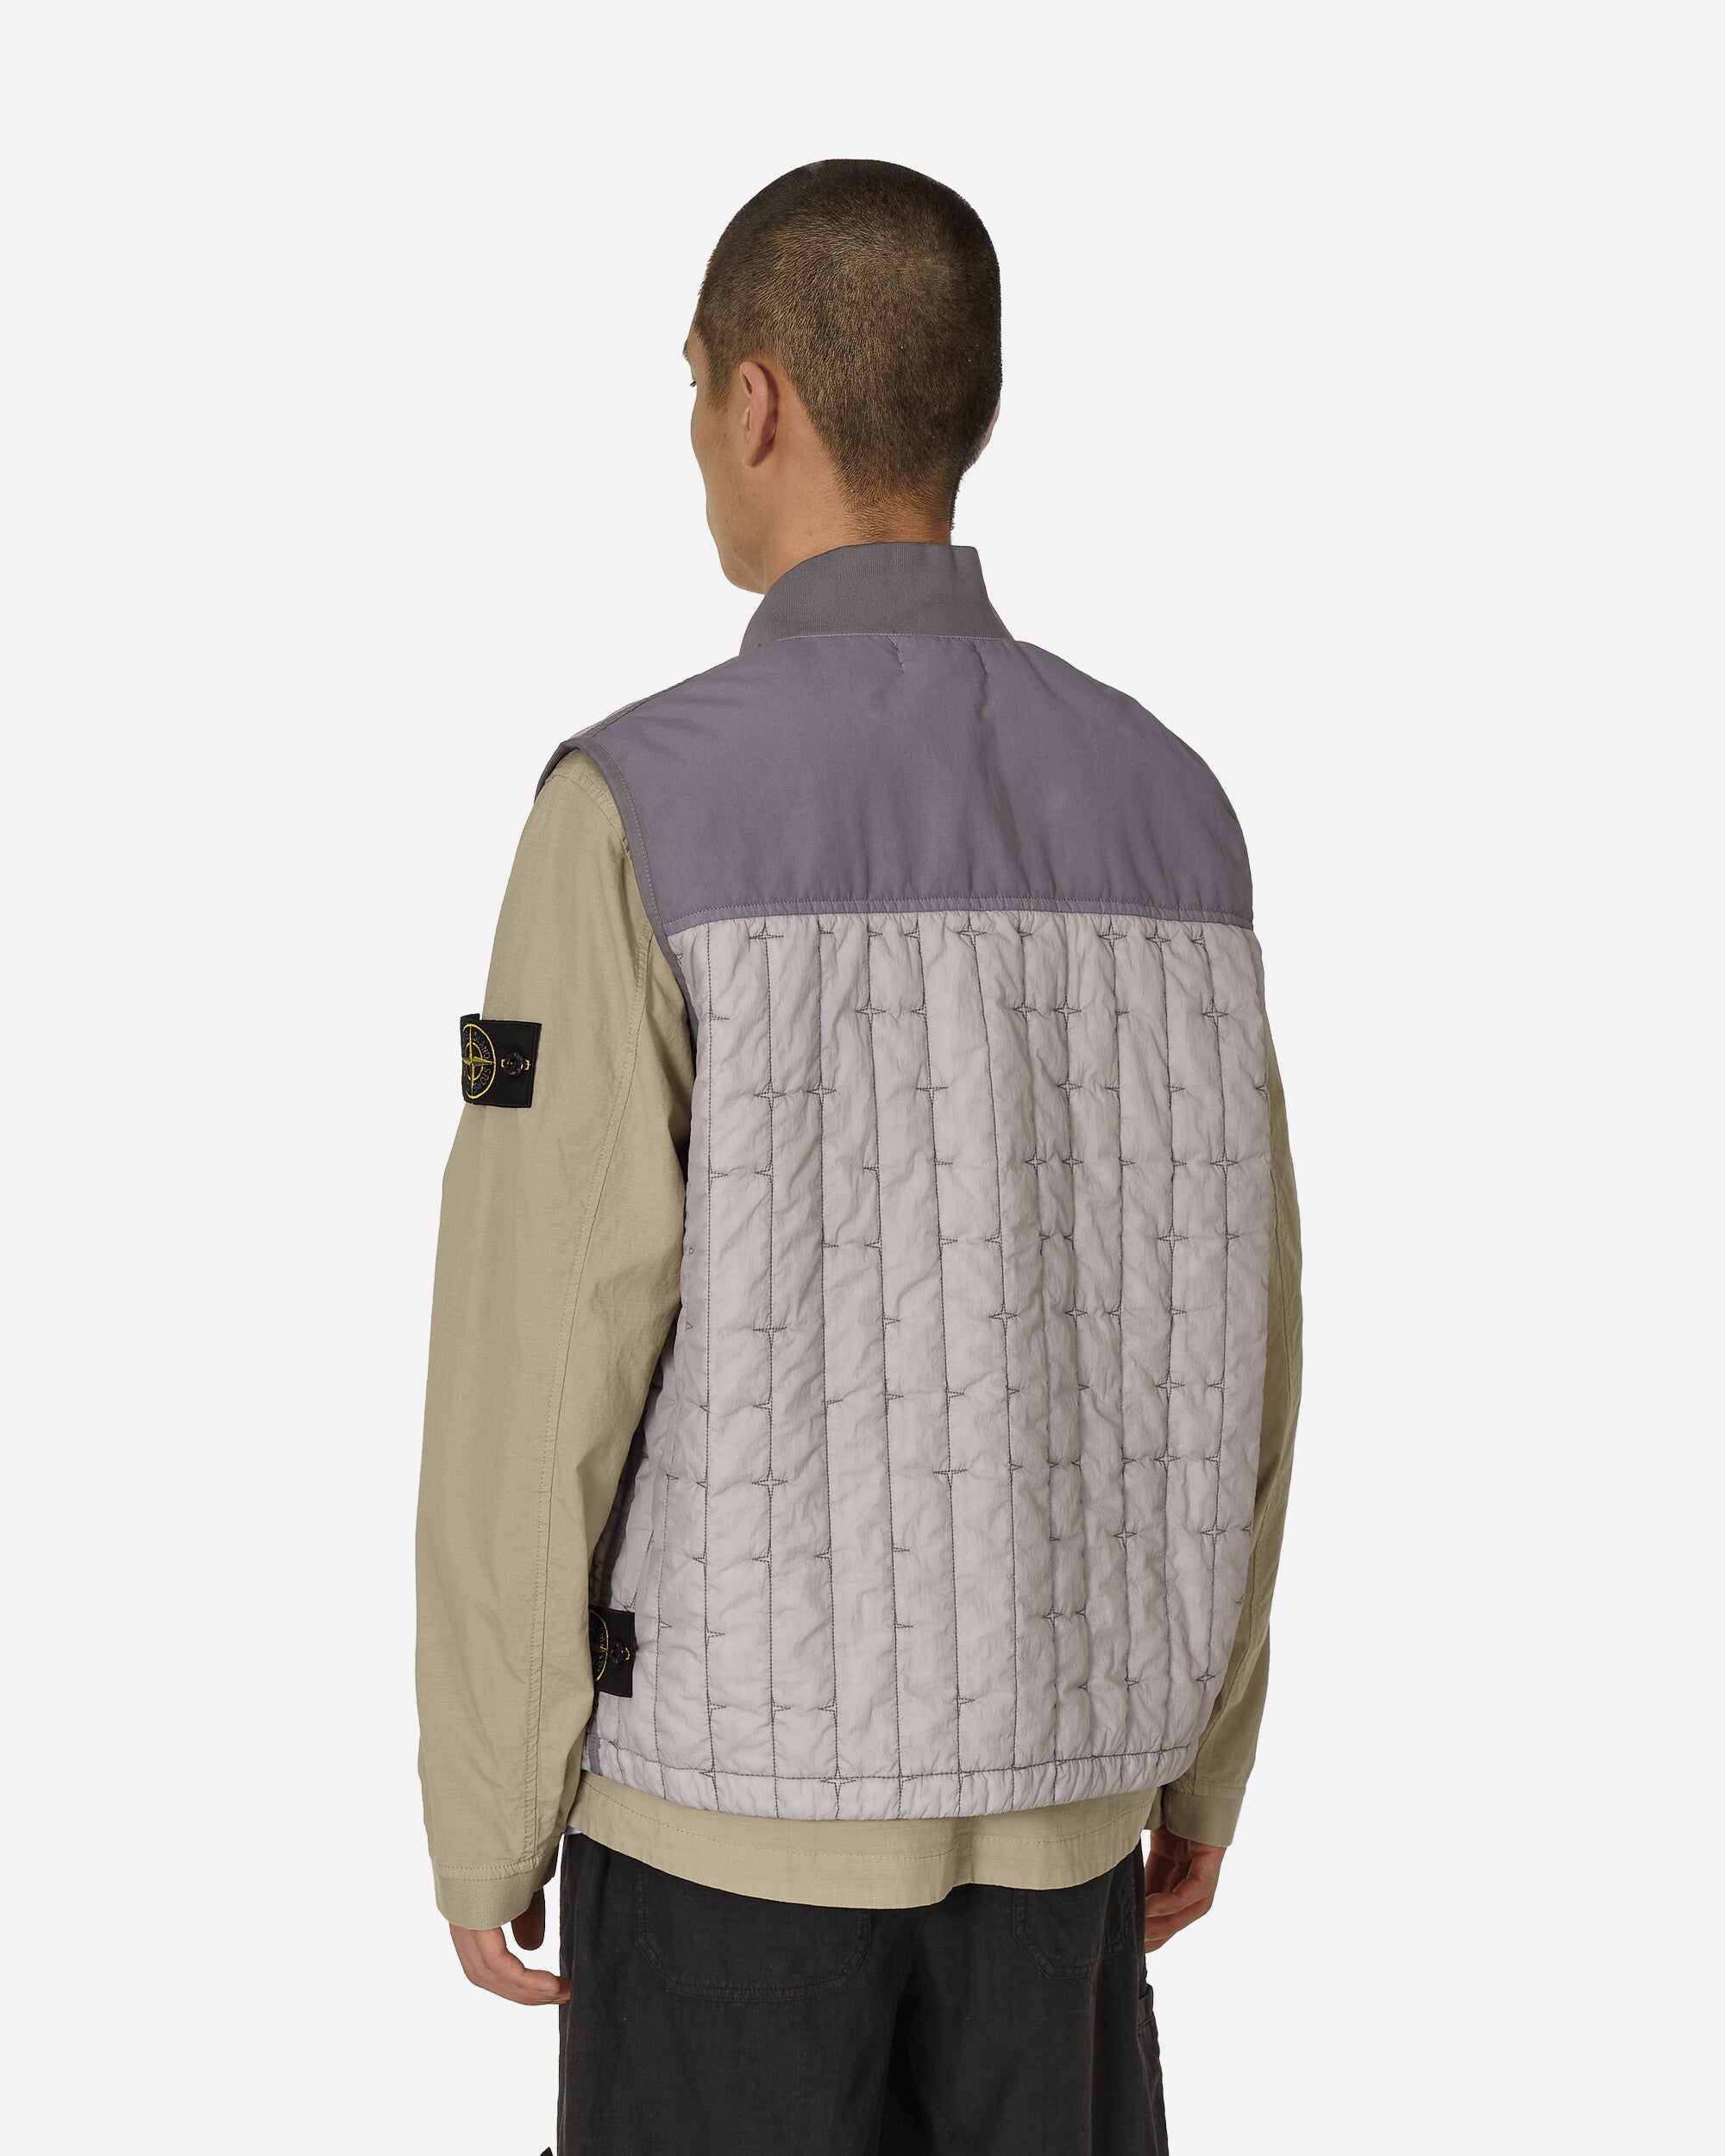 Stone Island Giubbotto Senza Maniche Dust Coats and Jackets Vests 8015G0231 V0064